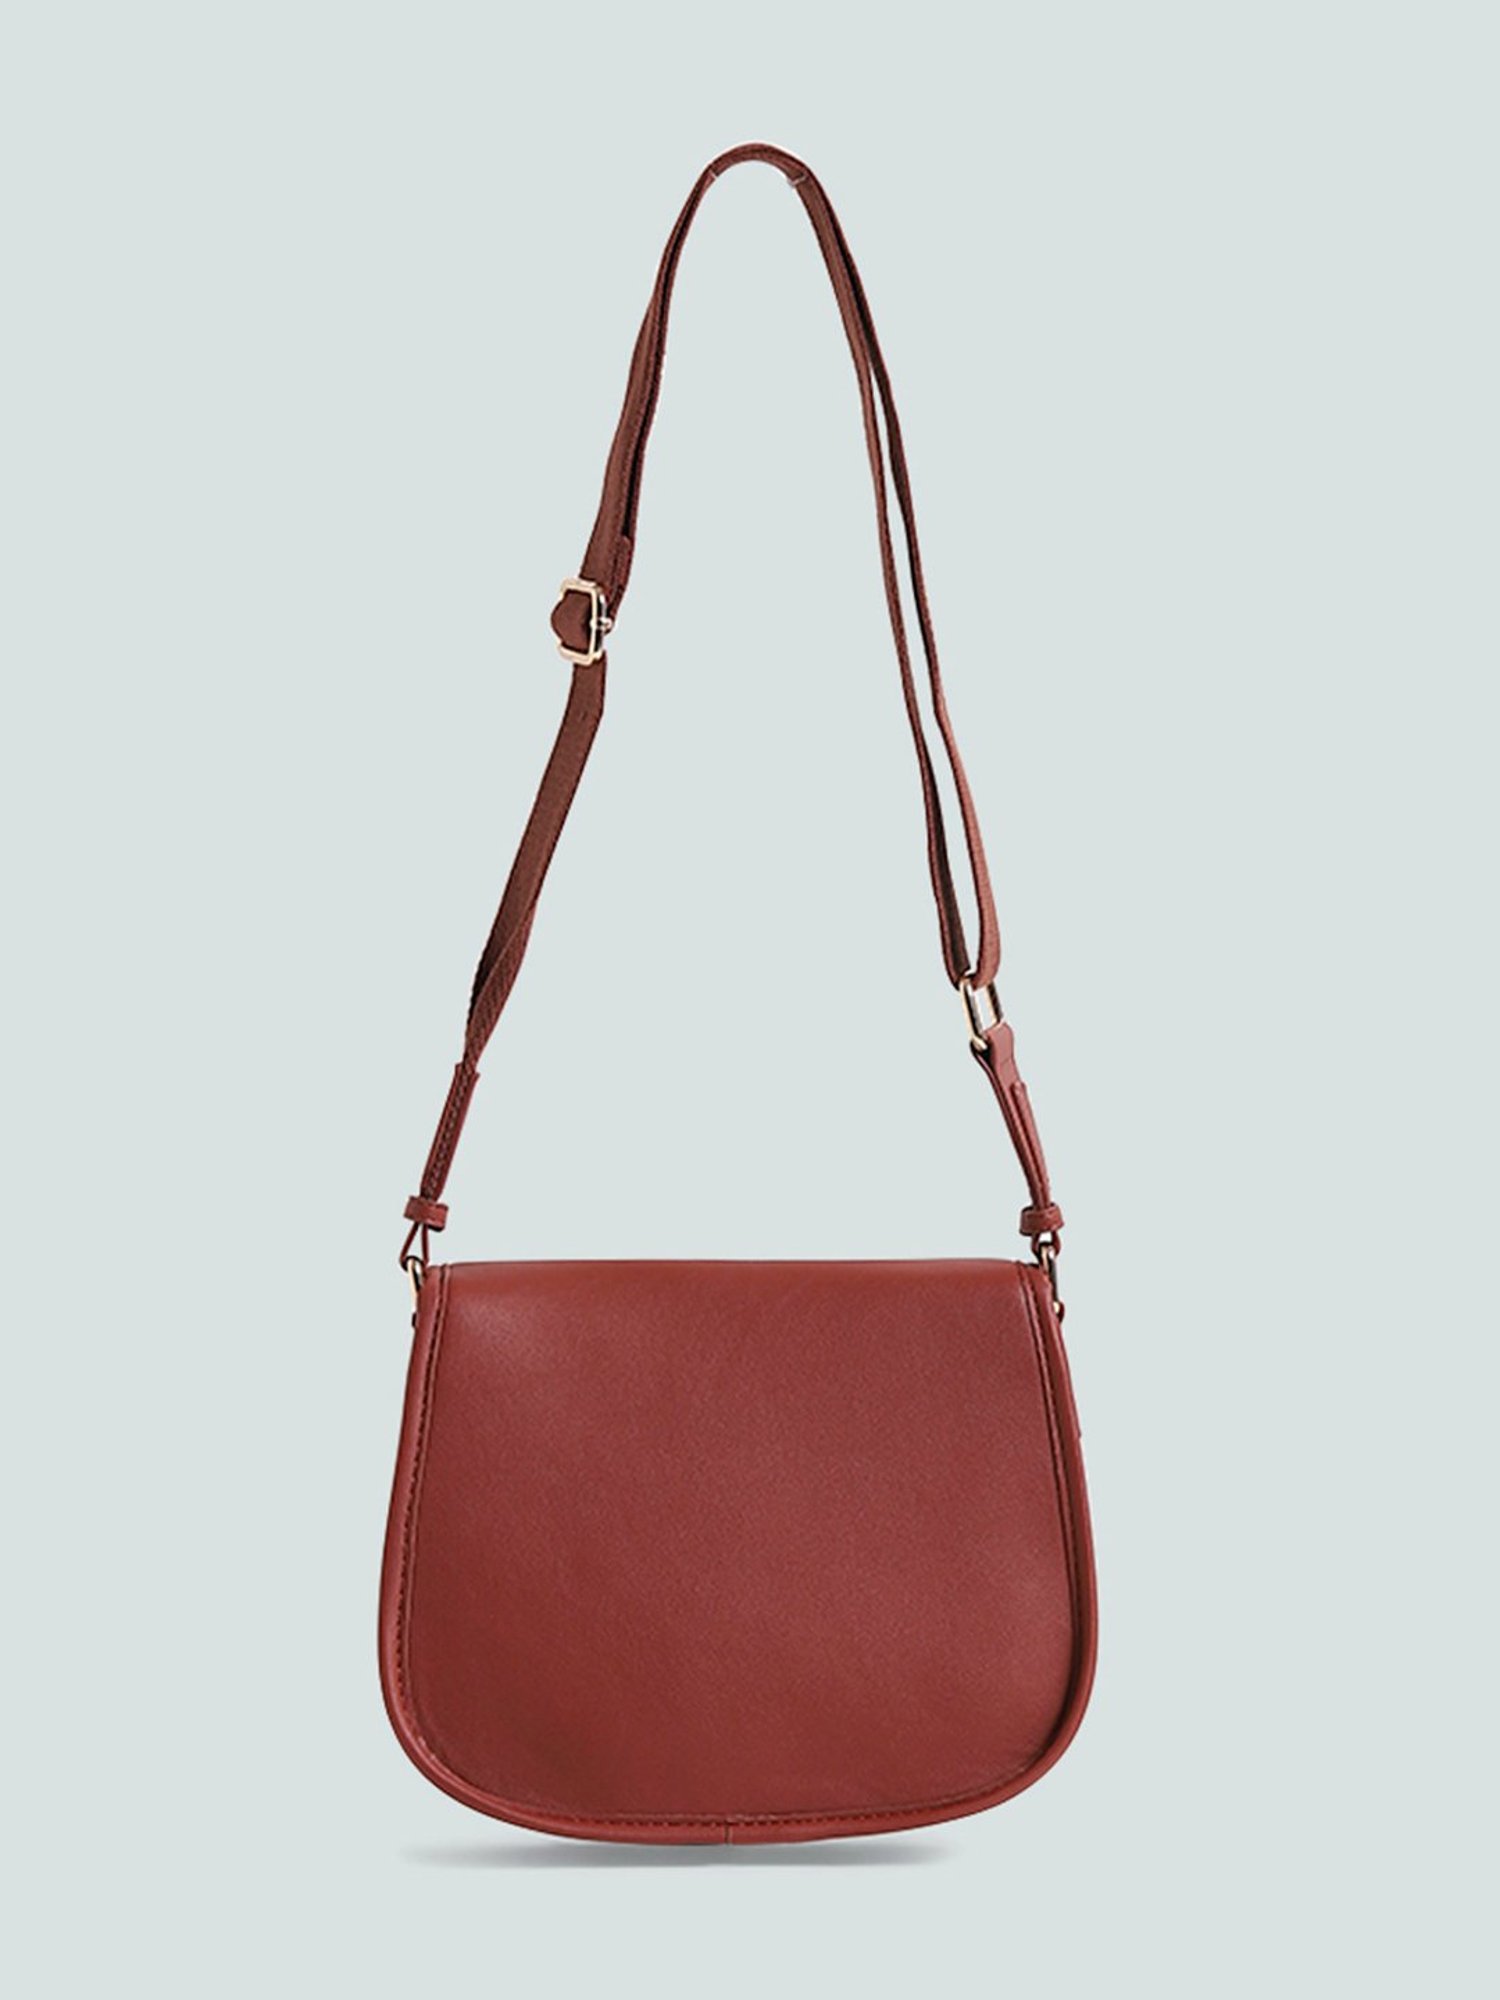 Genuine Vintage Brown Leather Bag Purse Crossbody Shoulder Bag Satchel Bag  Handb by Thar Artefacts, Made in India